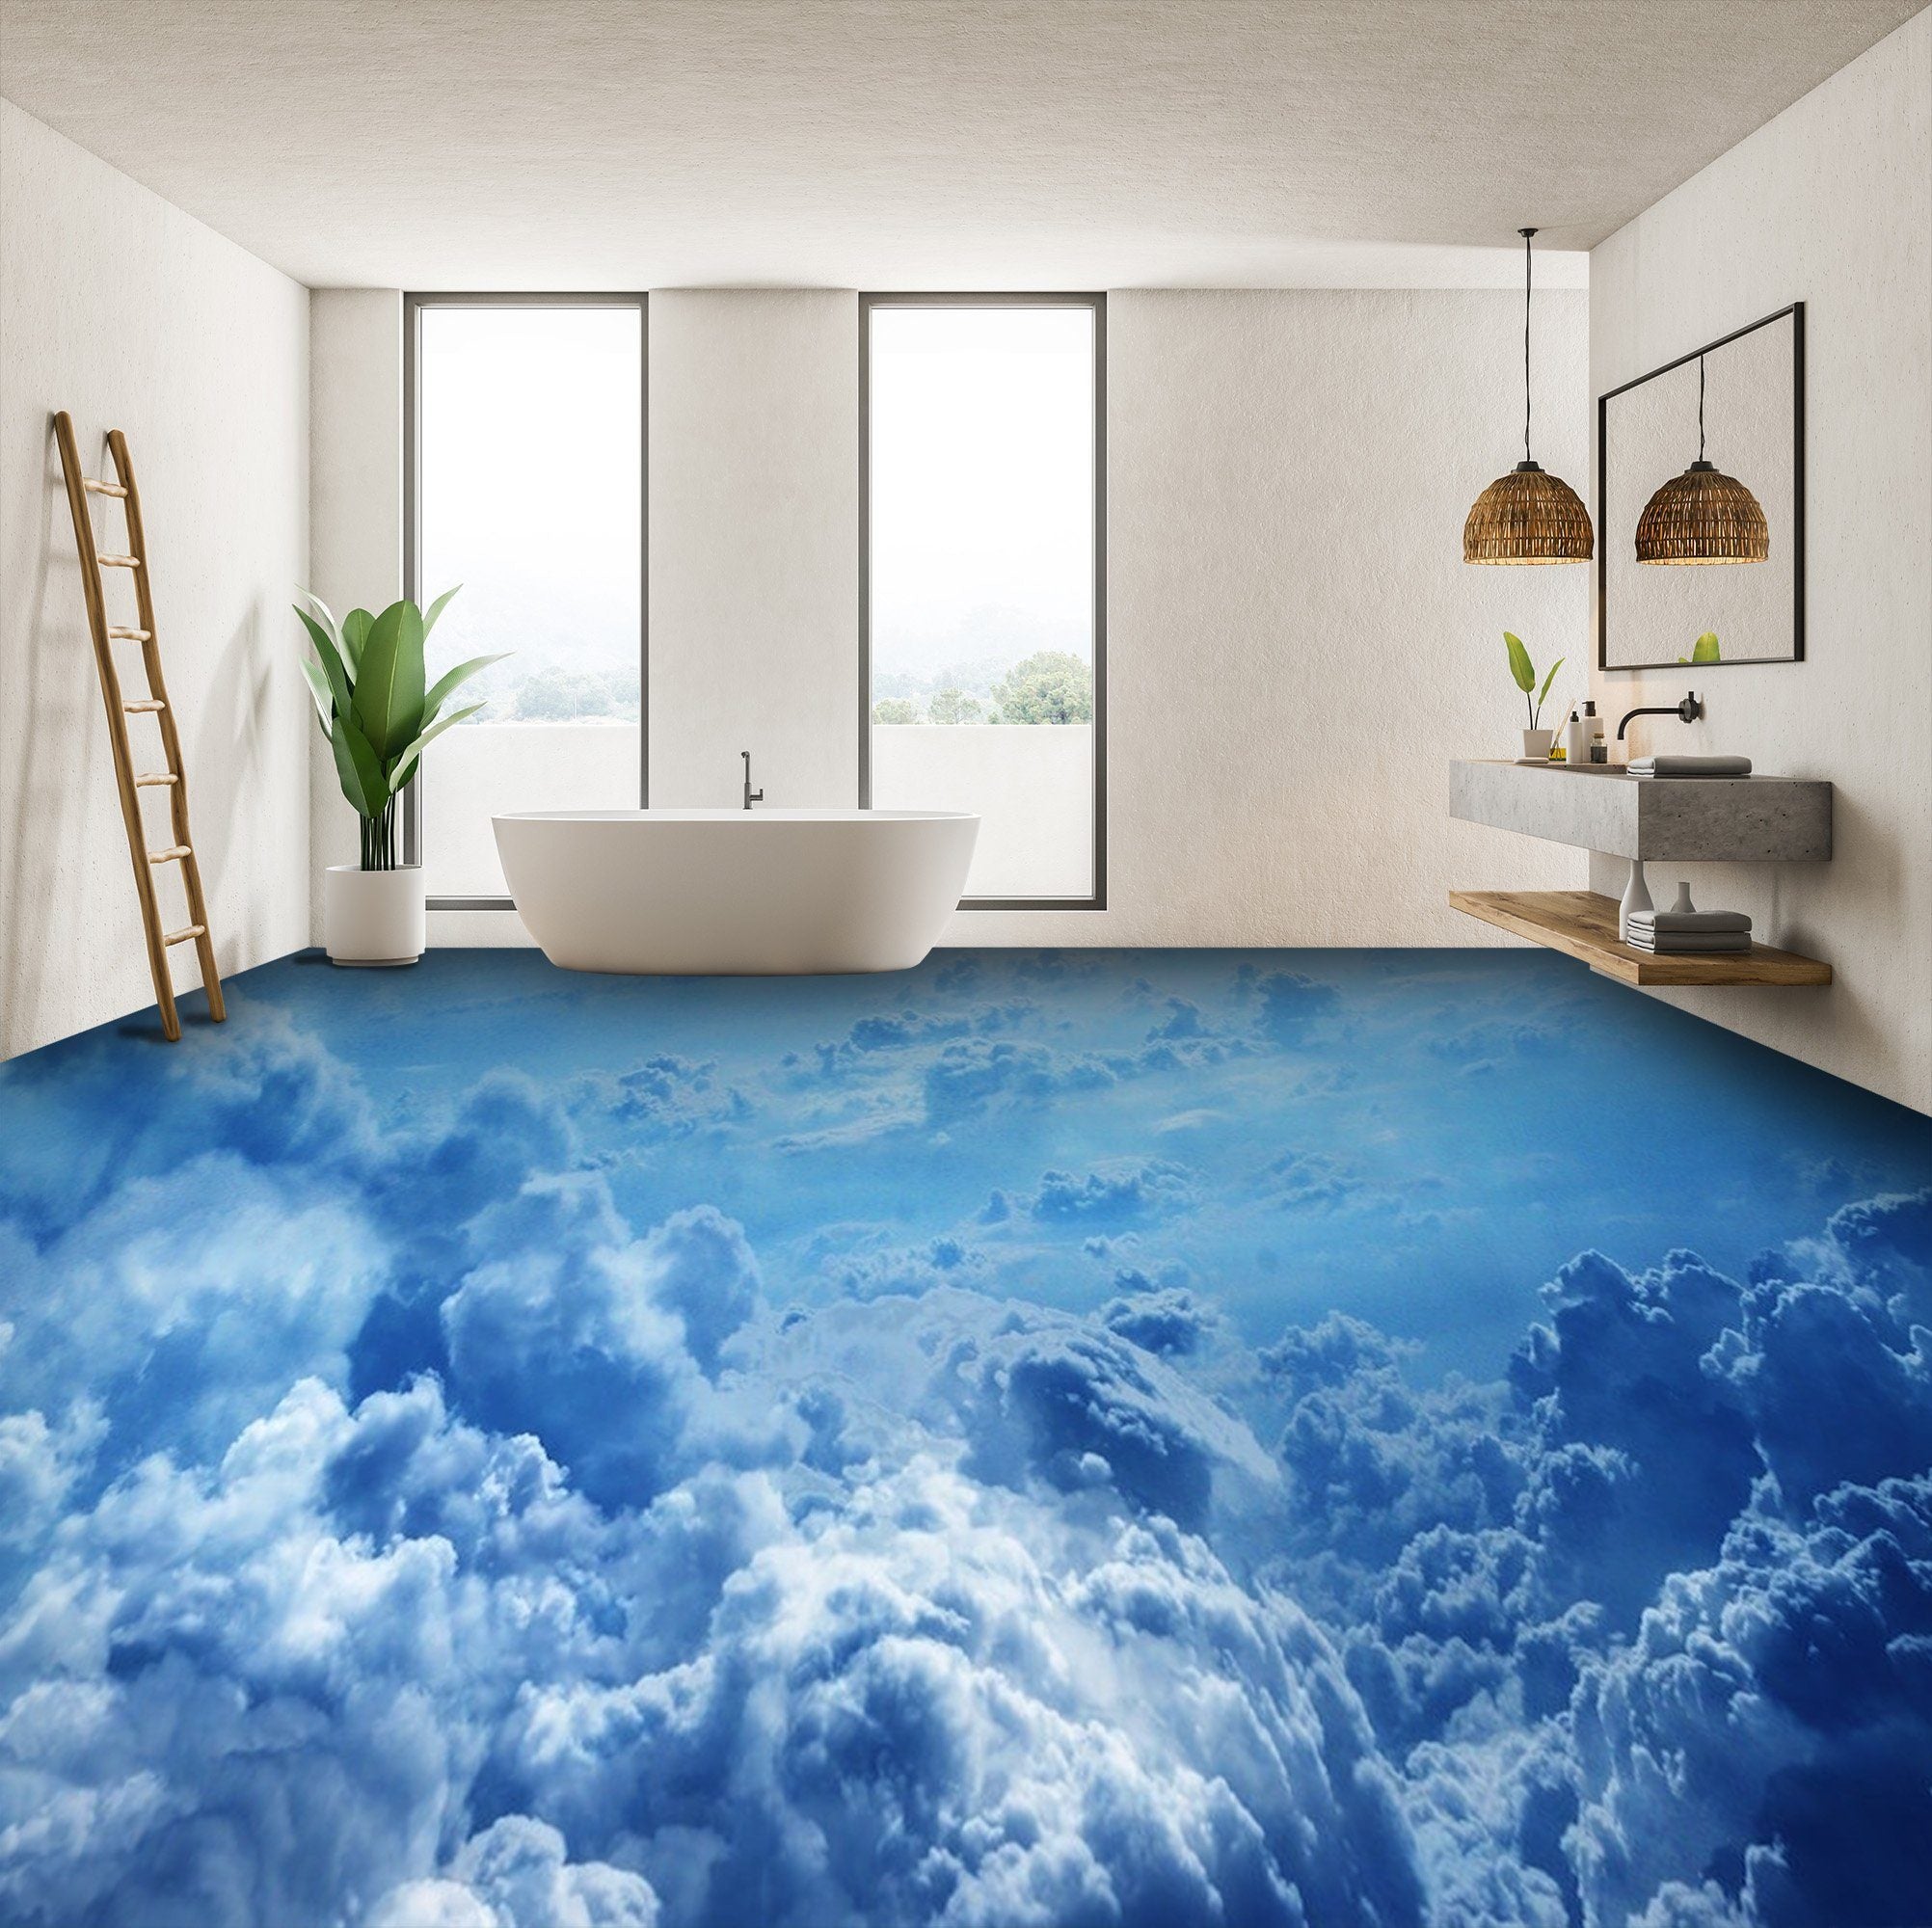 3D Rolling Clouds Floor Mural Wallpaper AJ Wallpaper 2 